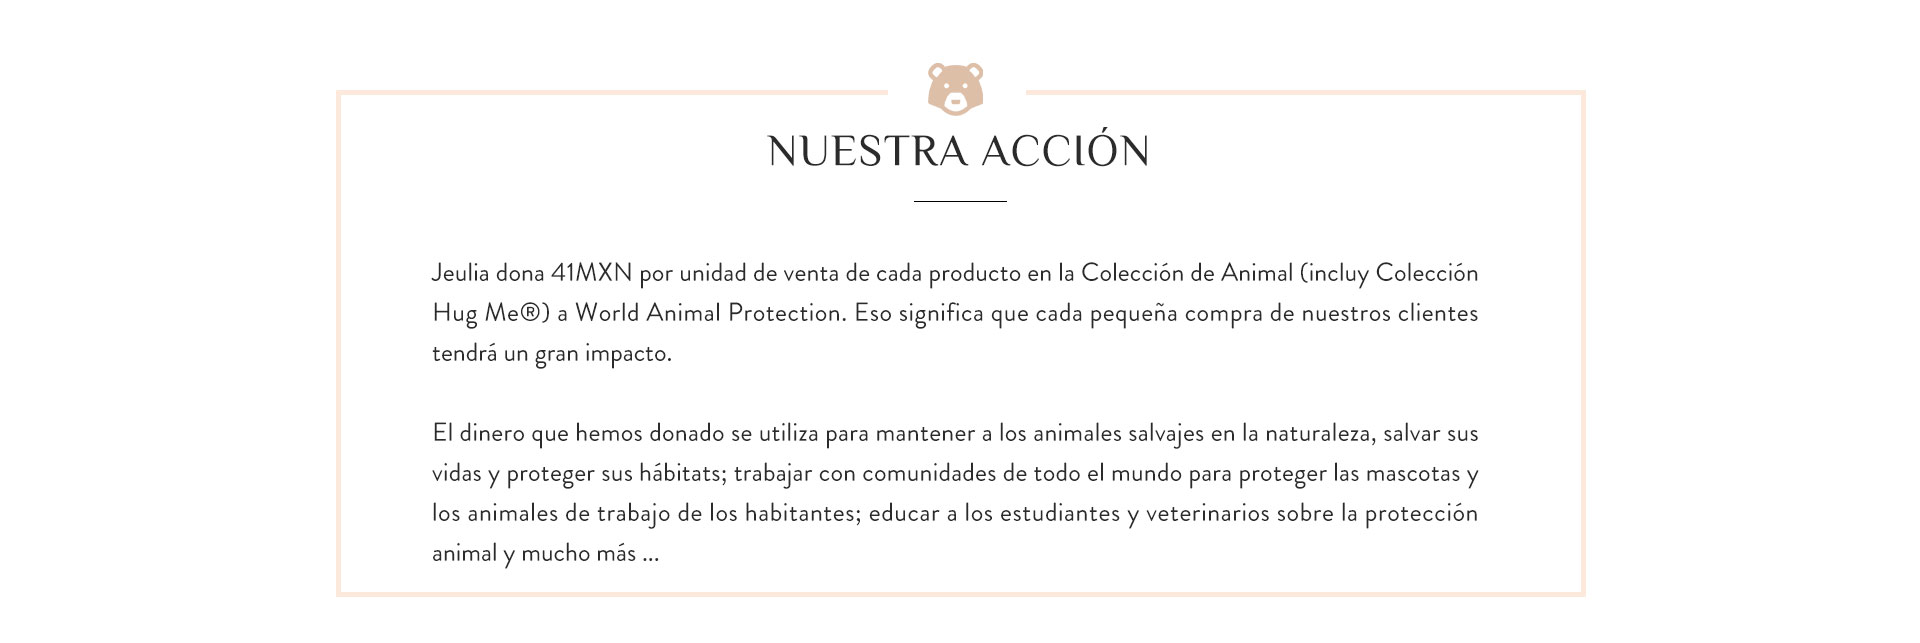 Jeulia's Partnership with World Animal Protection